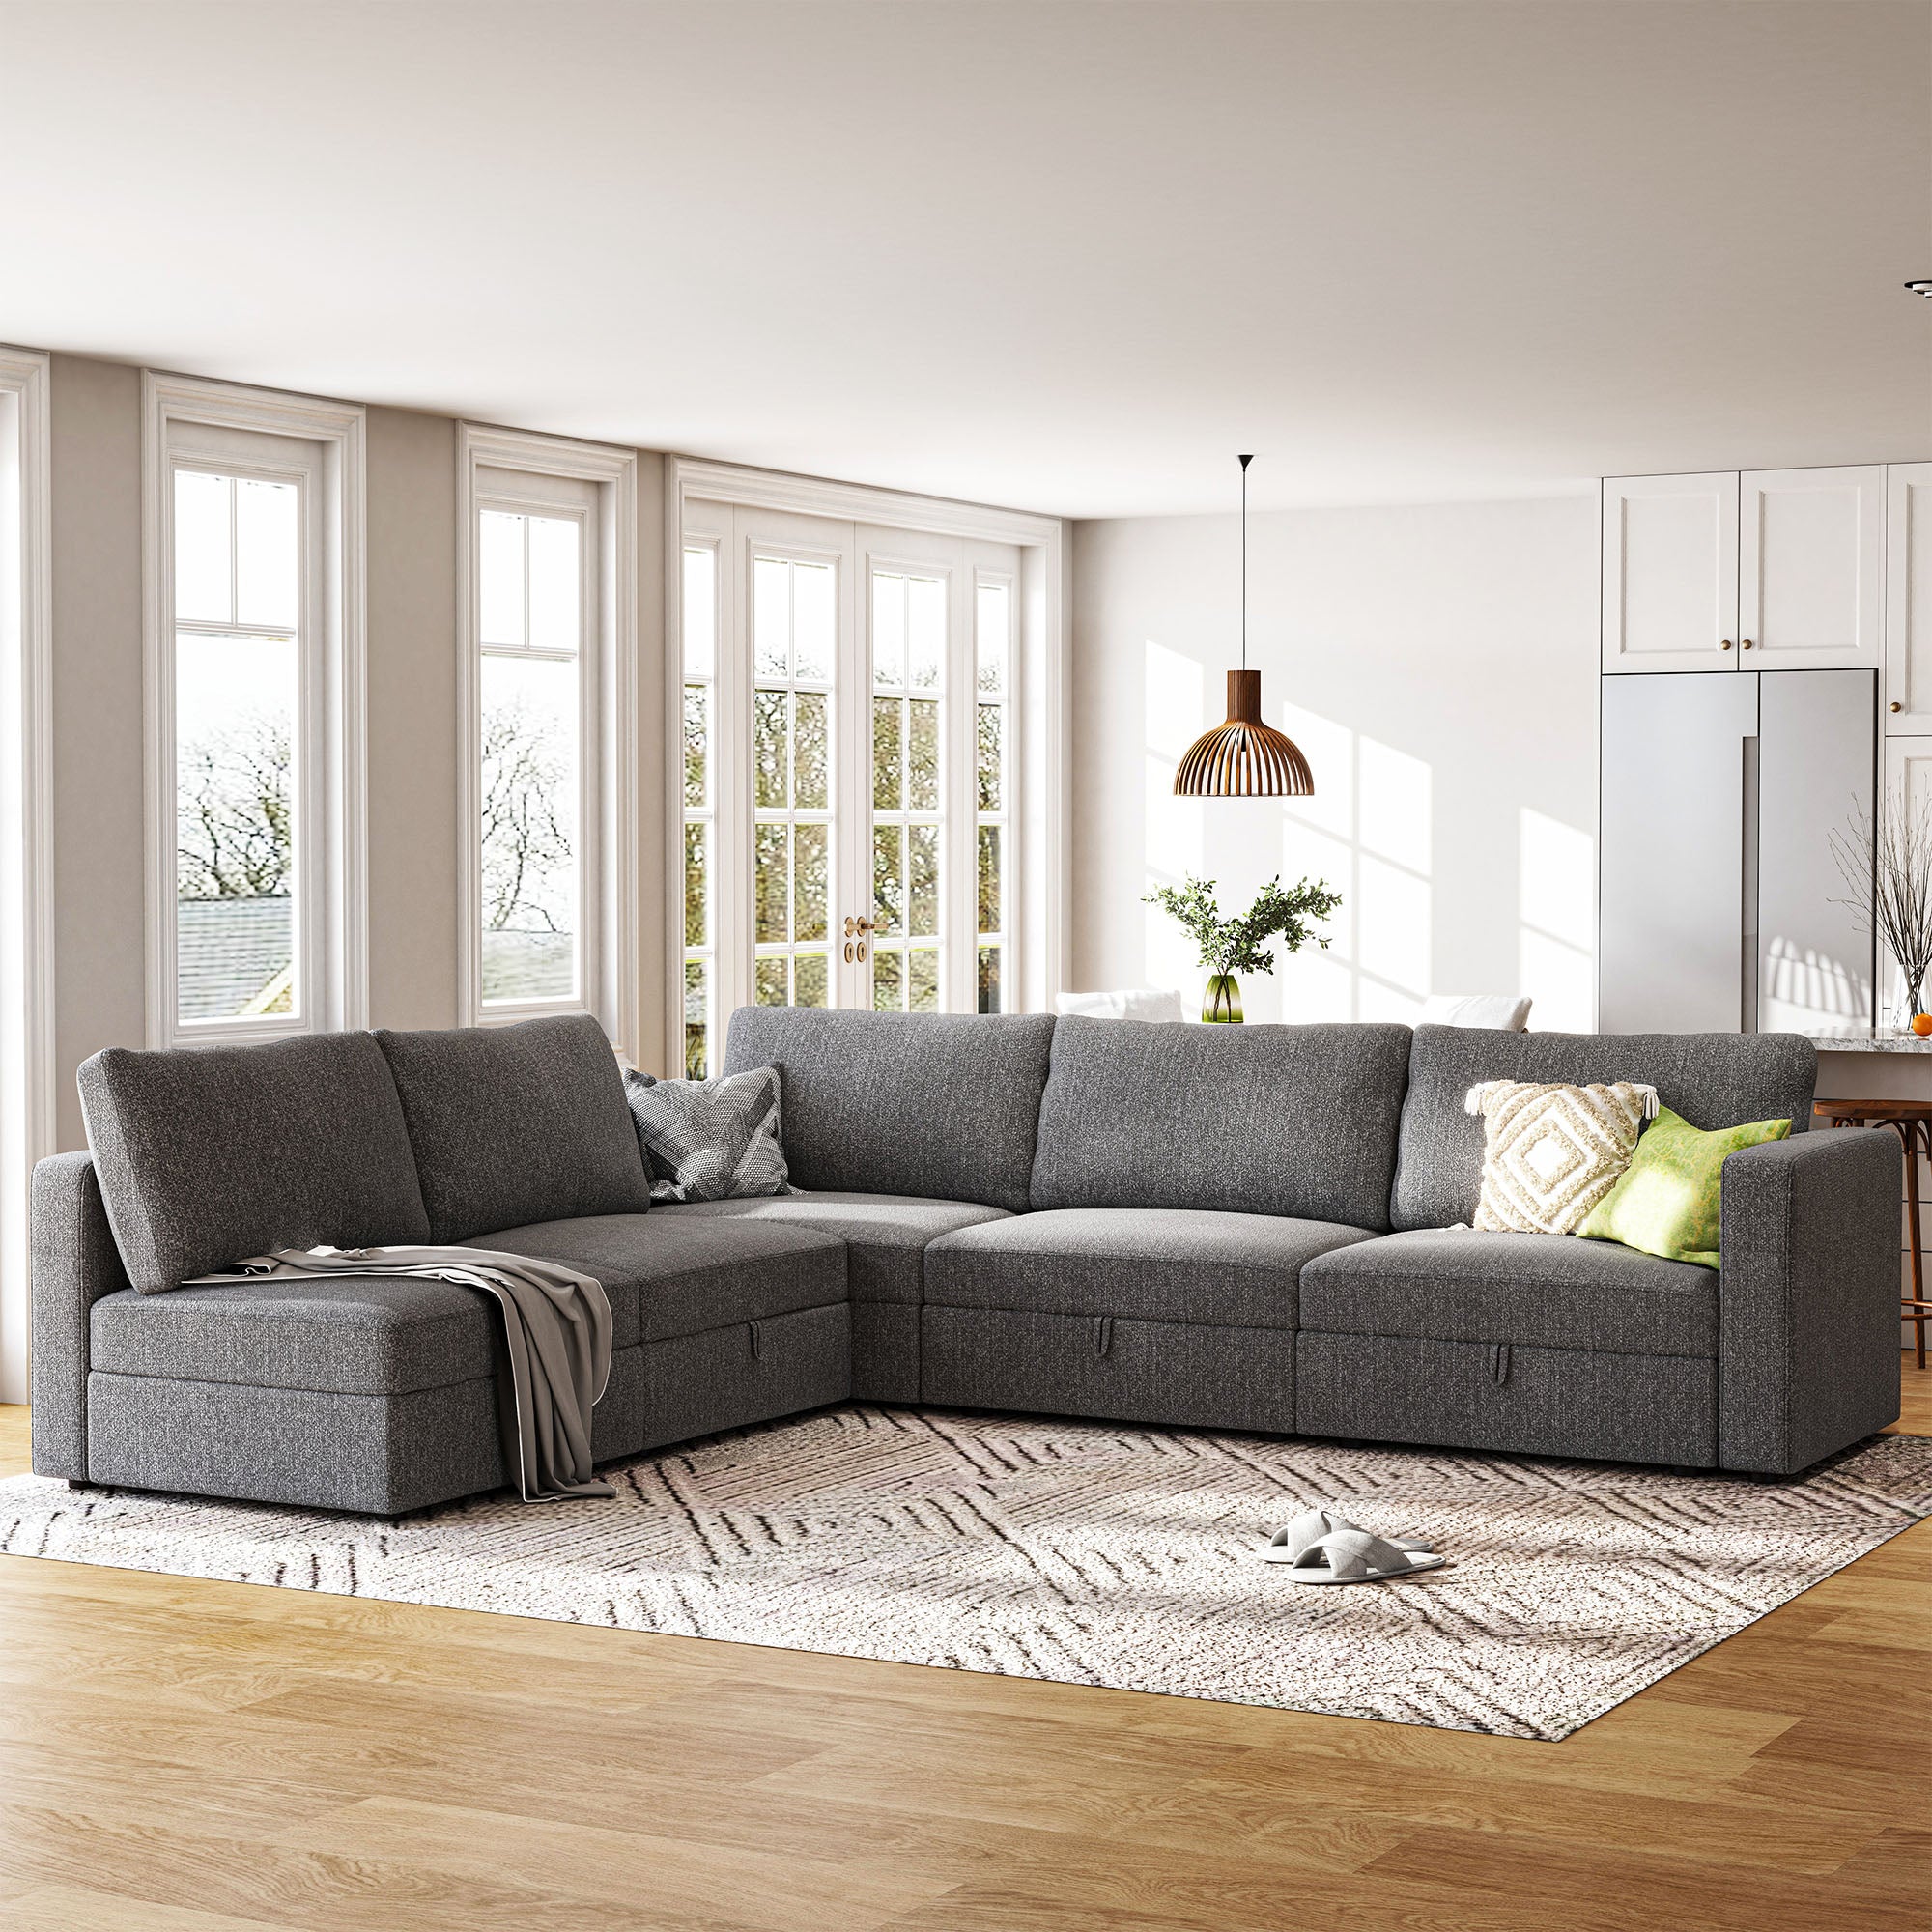 HONBAY Fabric Customizable Modular Sectional Sofa for Living Room